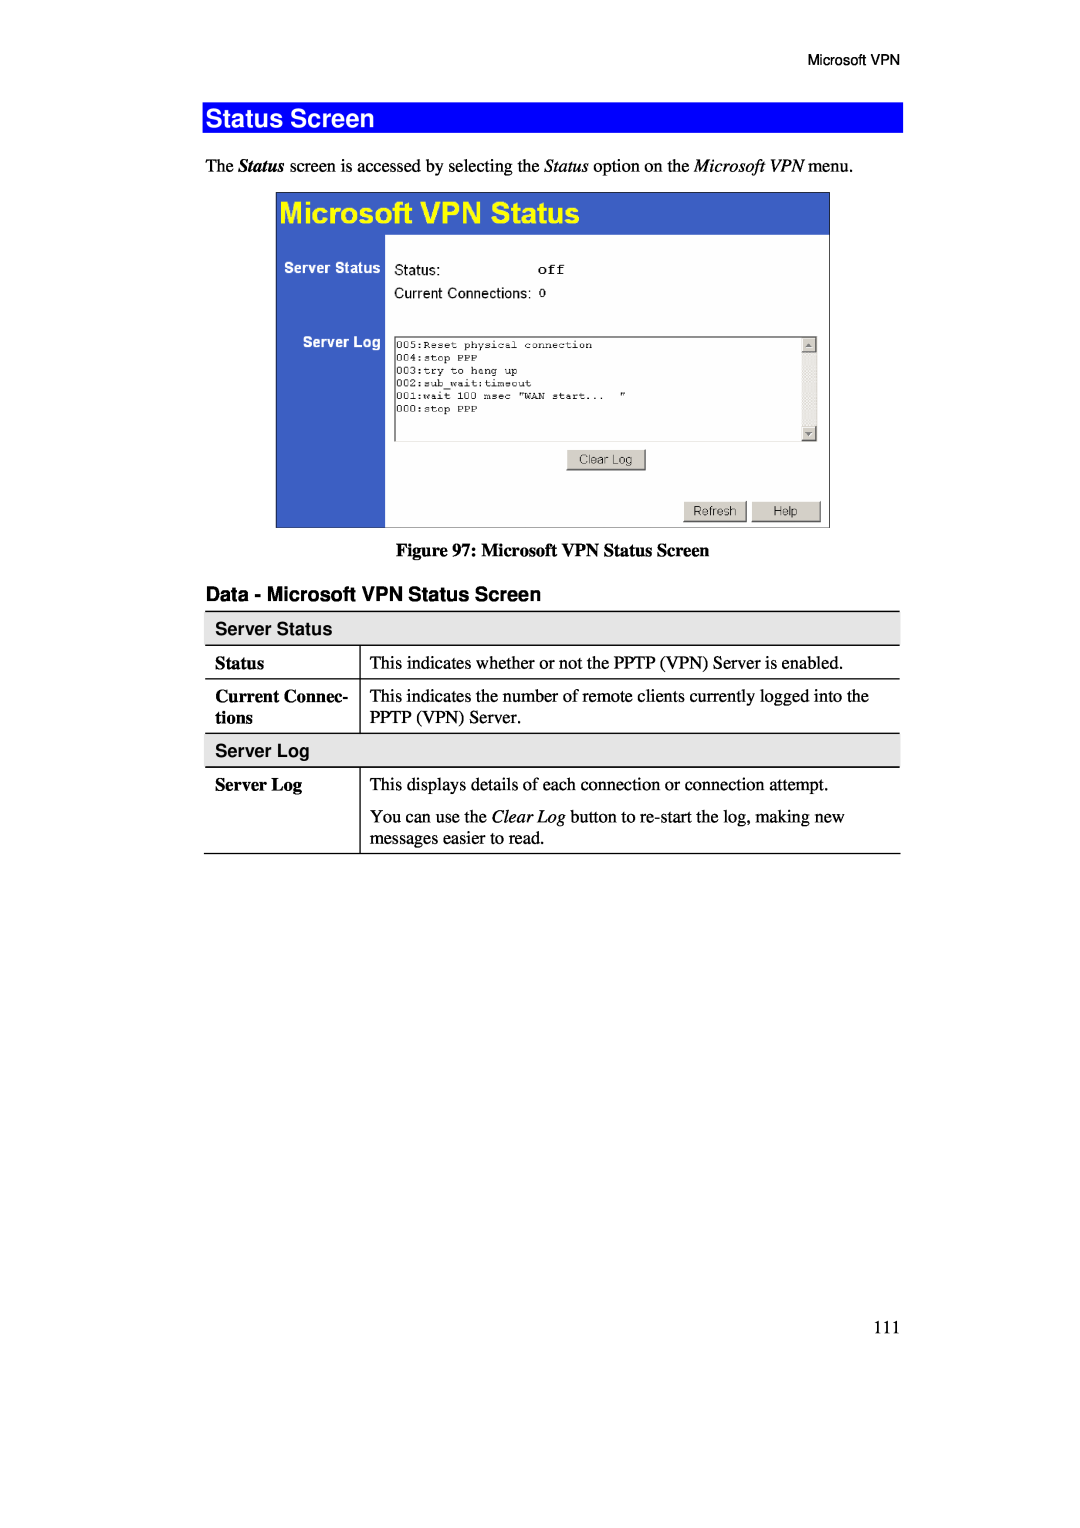 TRENDnet BRV204 manual Microsoft VPN Status Screen, Server Status, tions, Server Log 